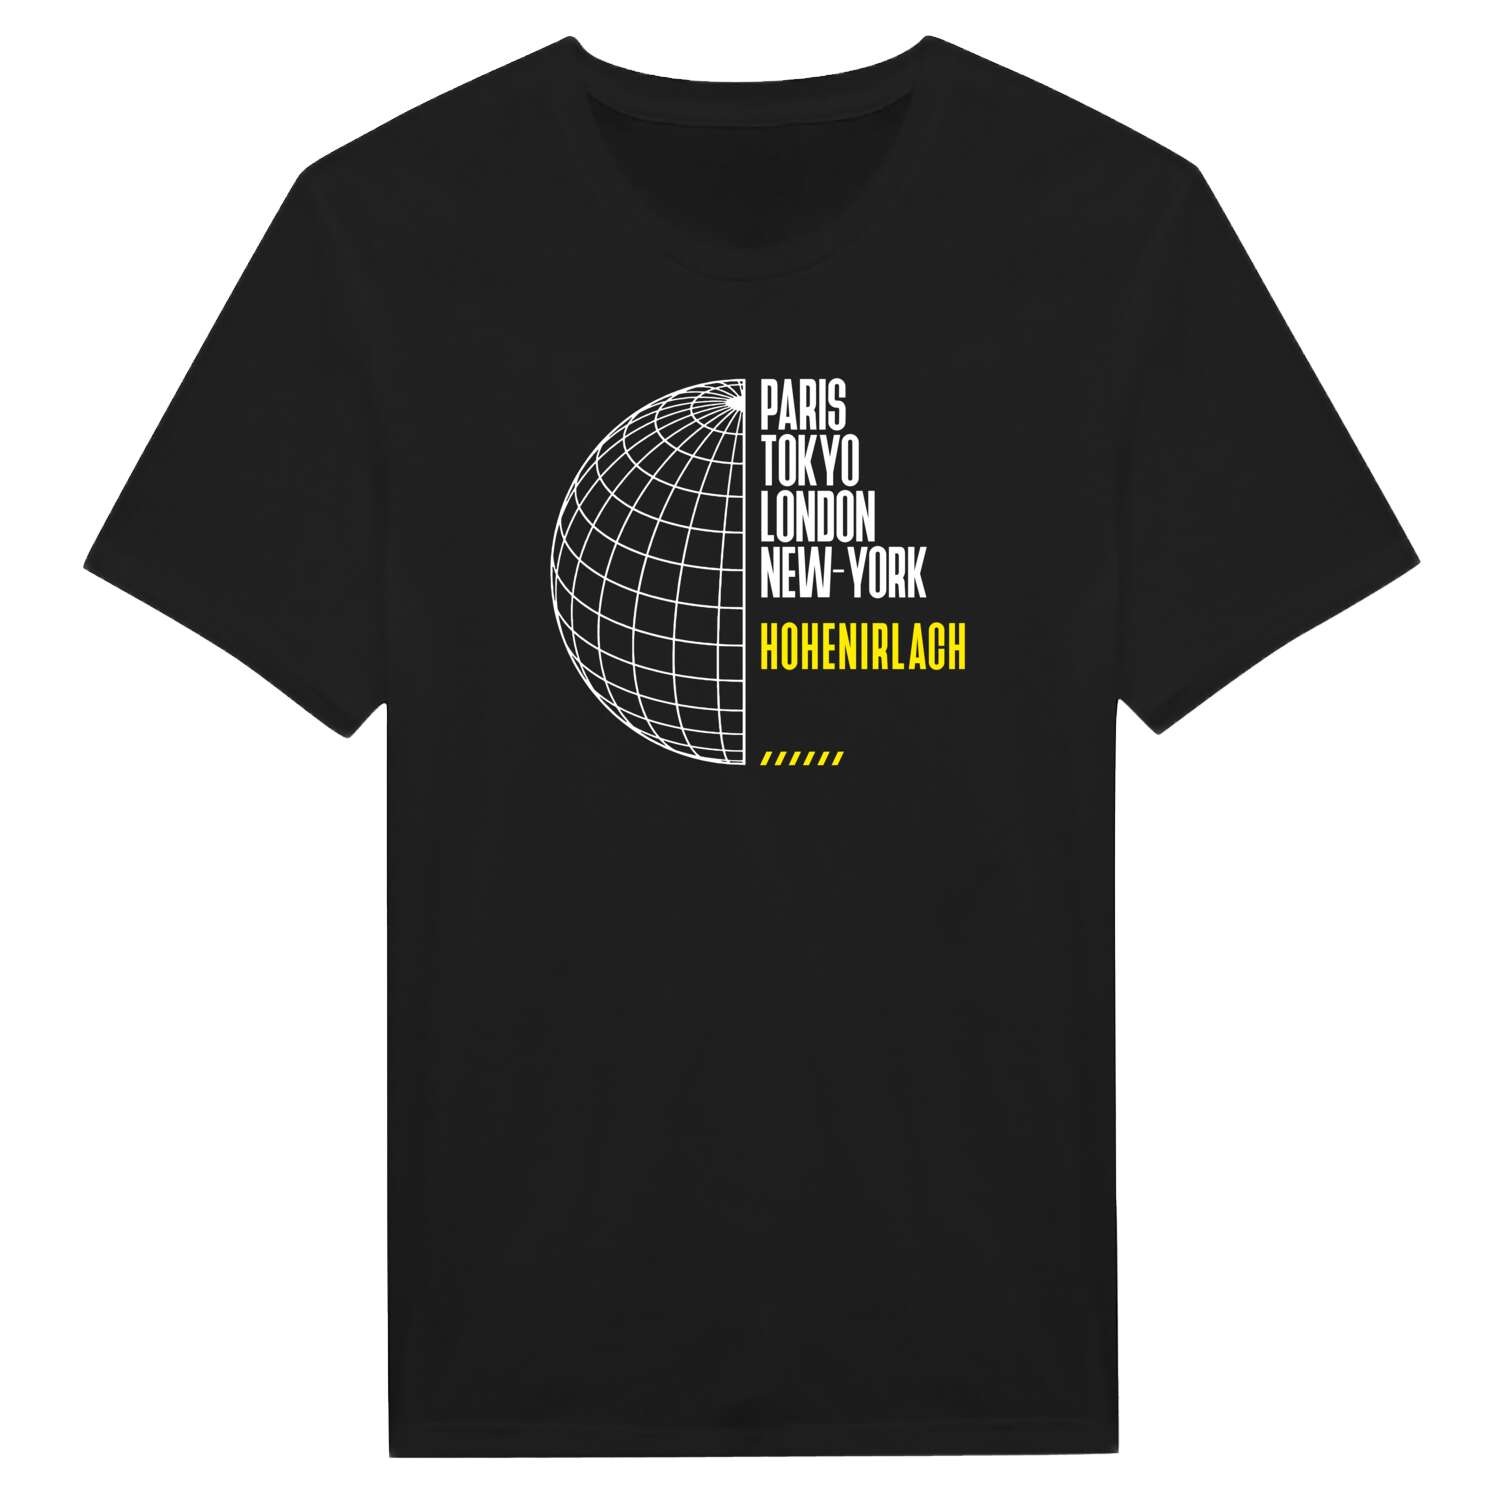 Hohenirlach T-Shirt »Paris Tokyo London«